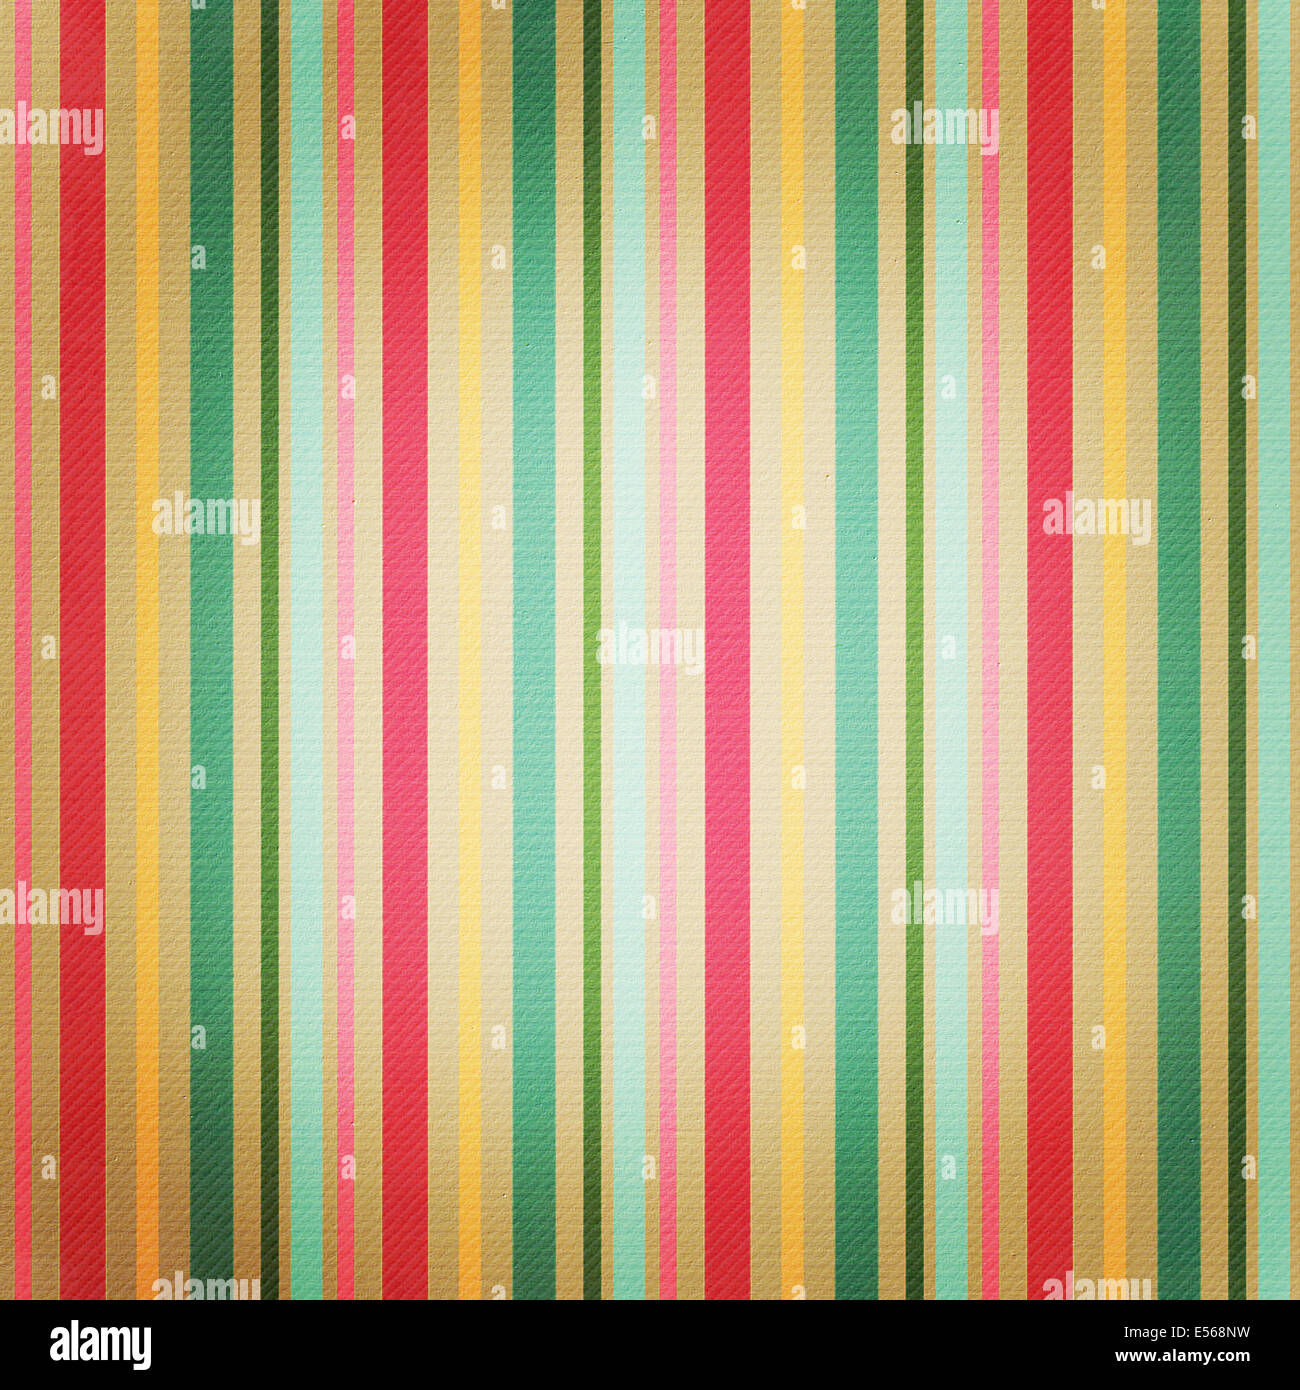 Retro stripe pattern with bright colors Stock Photo